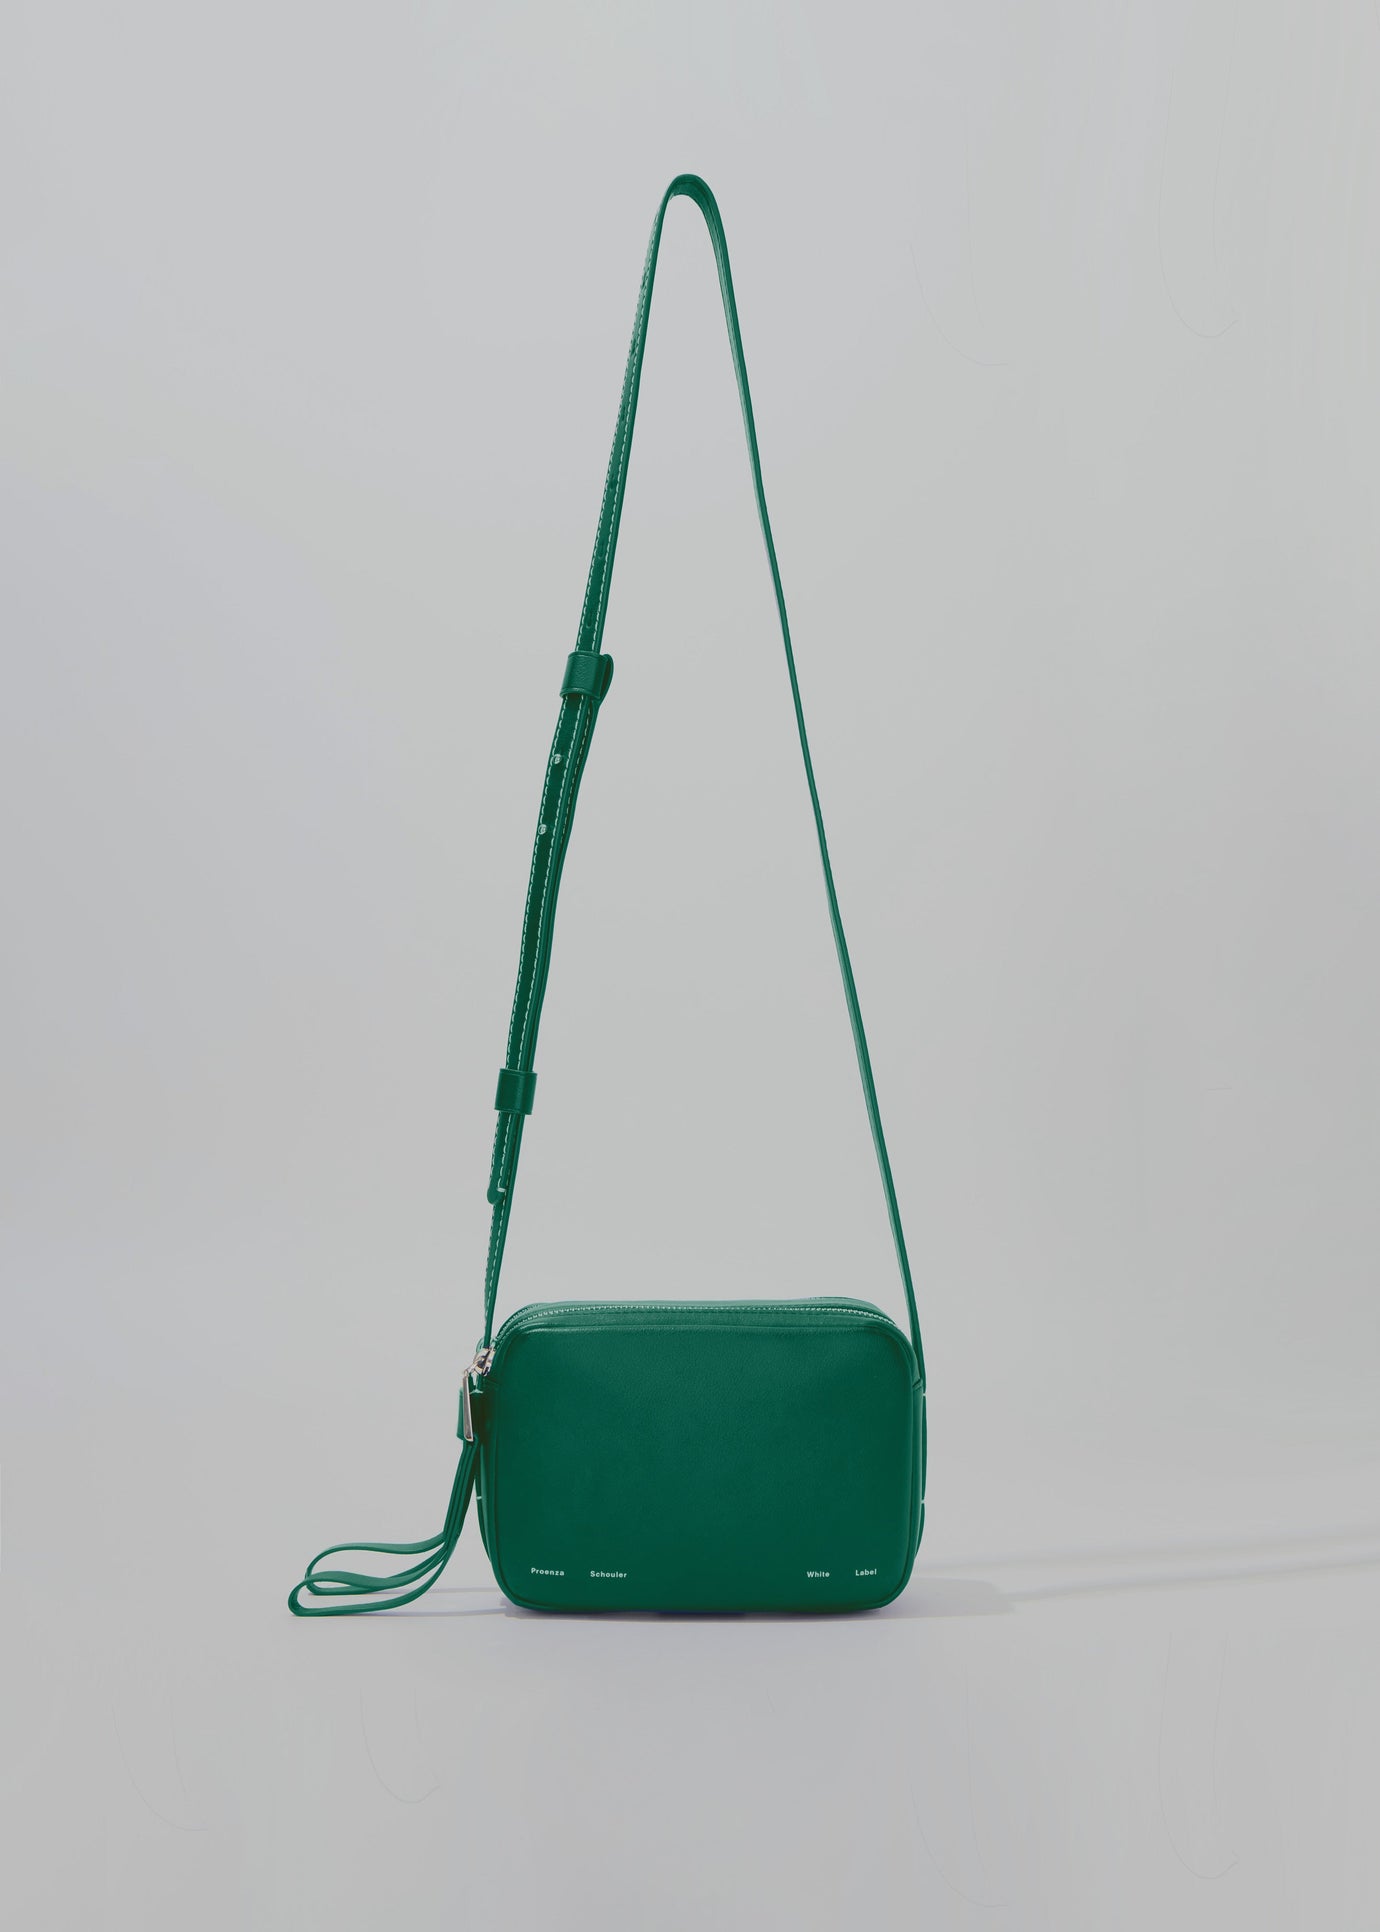 Proenza Schouler White Label Watts Leather Camera Bag - Emerald